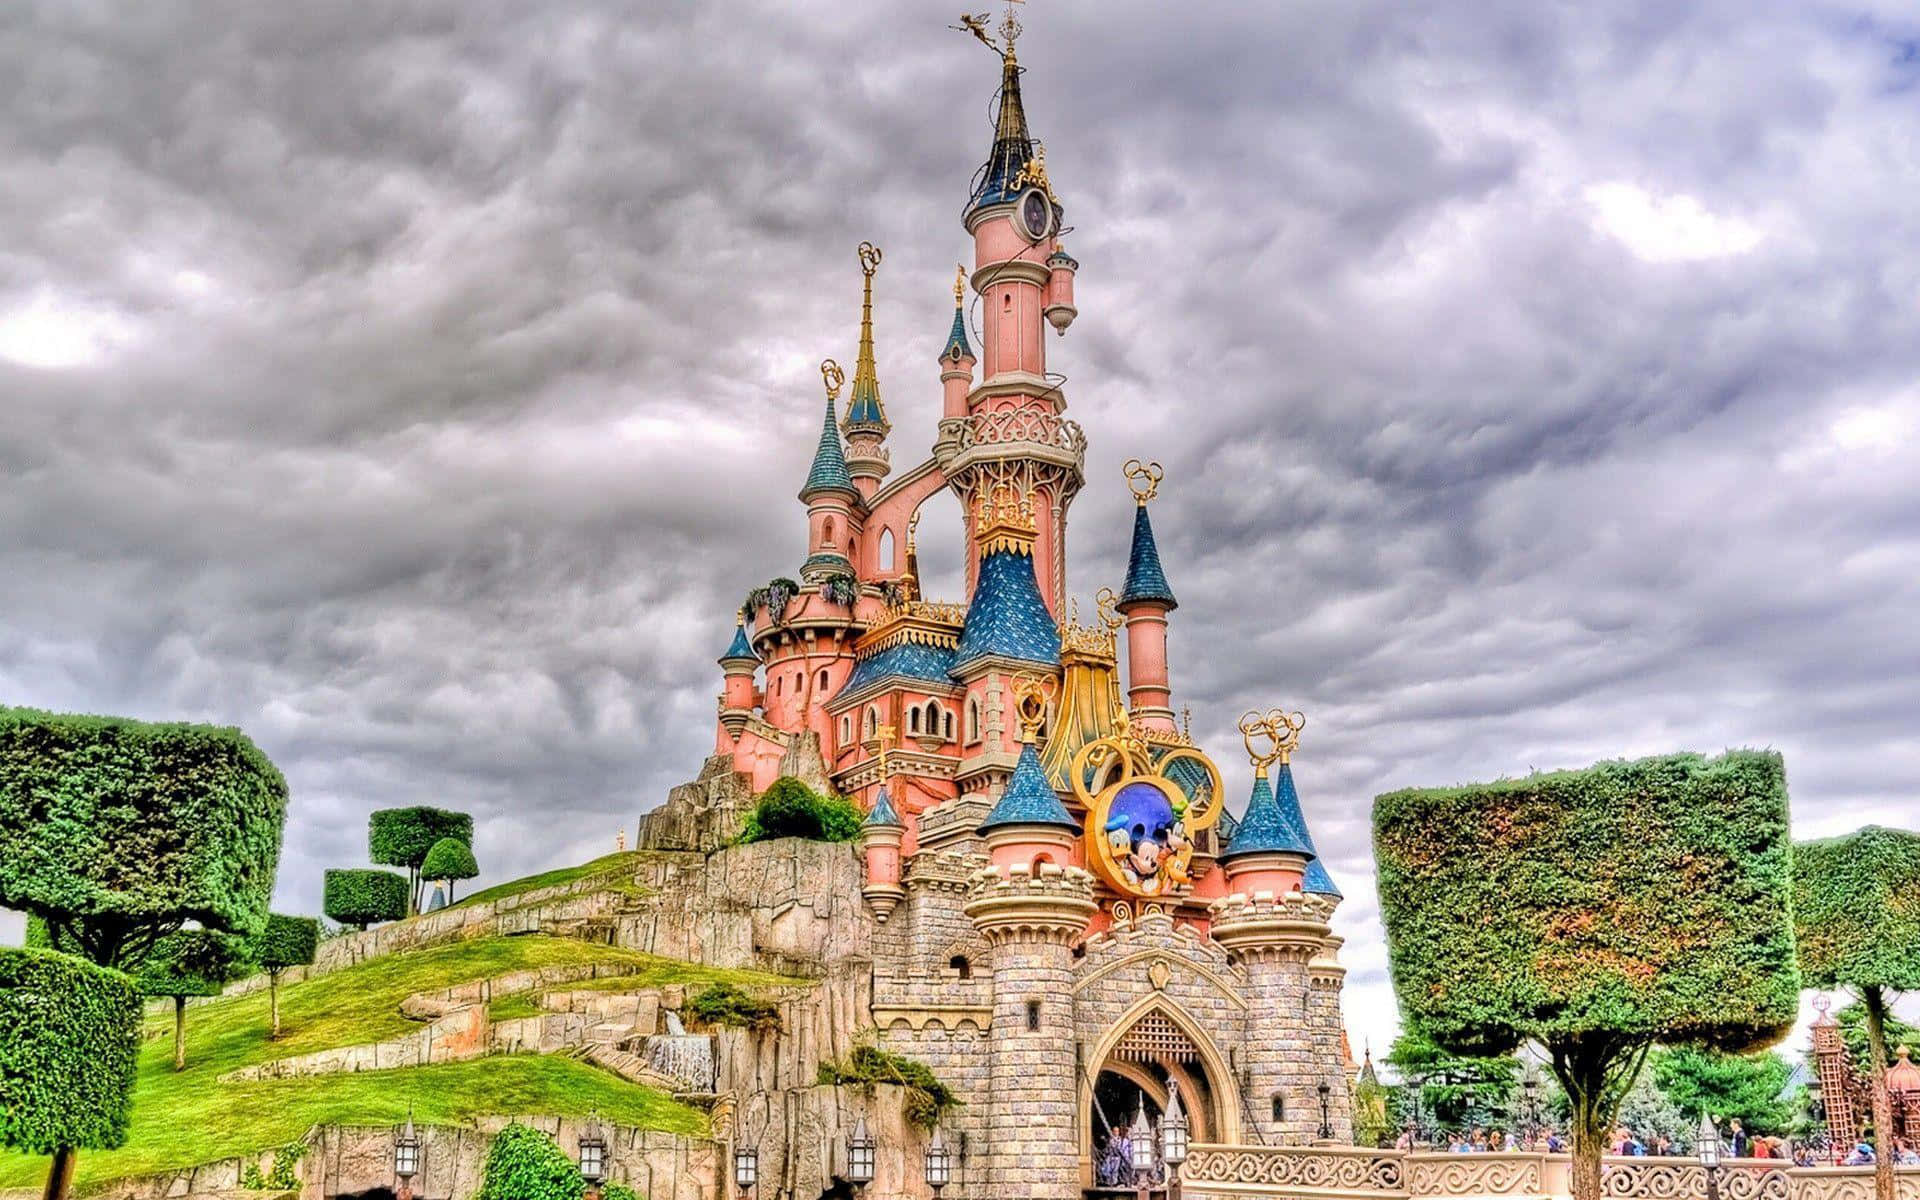 Disneyland Paris mod grå skyer. Wallpaper